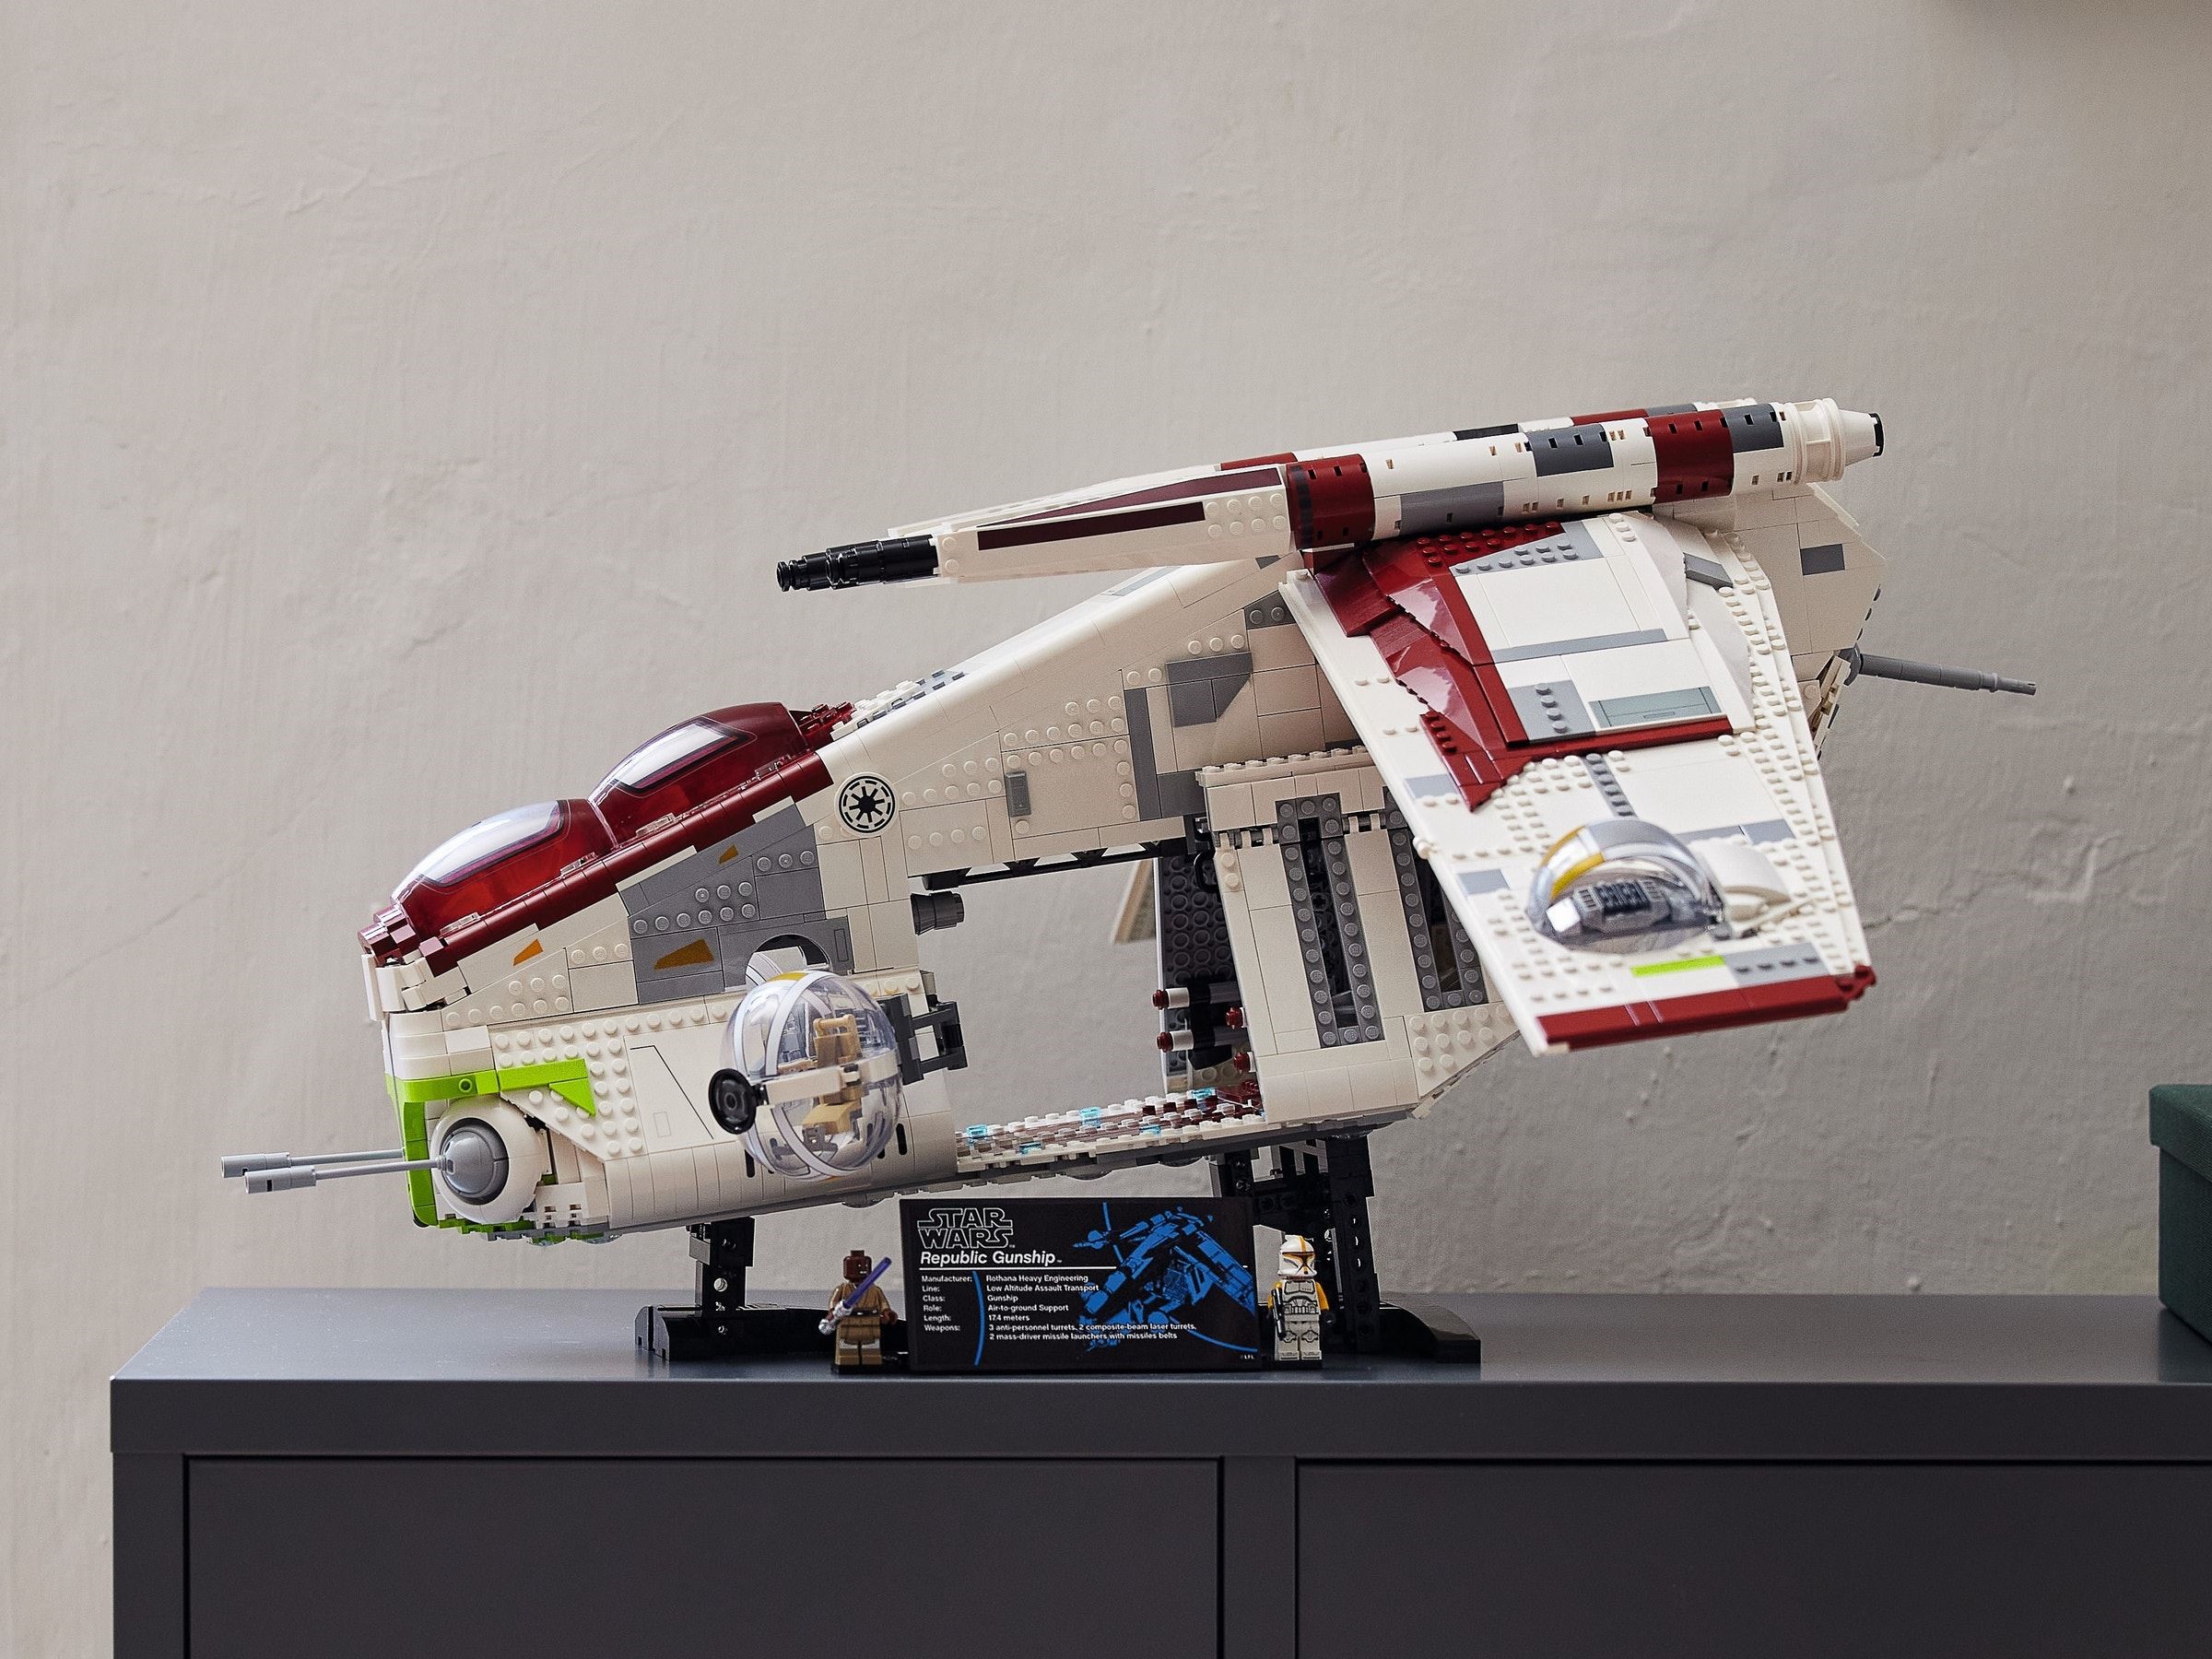 Lego releases massive 'Star Wars' UCS Republic Gunship with 3,292